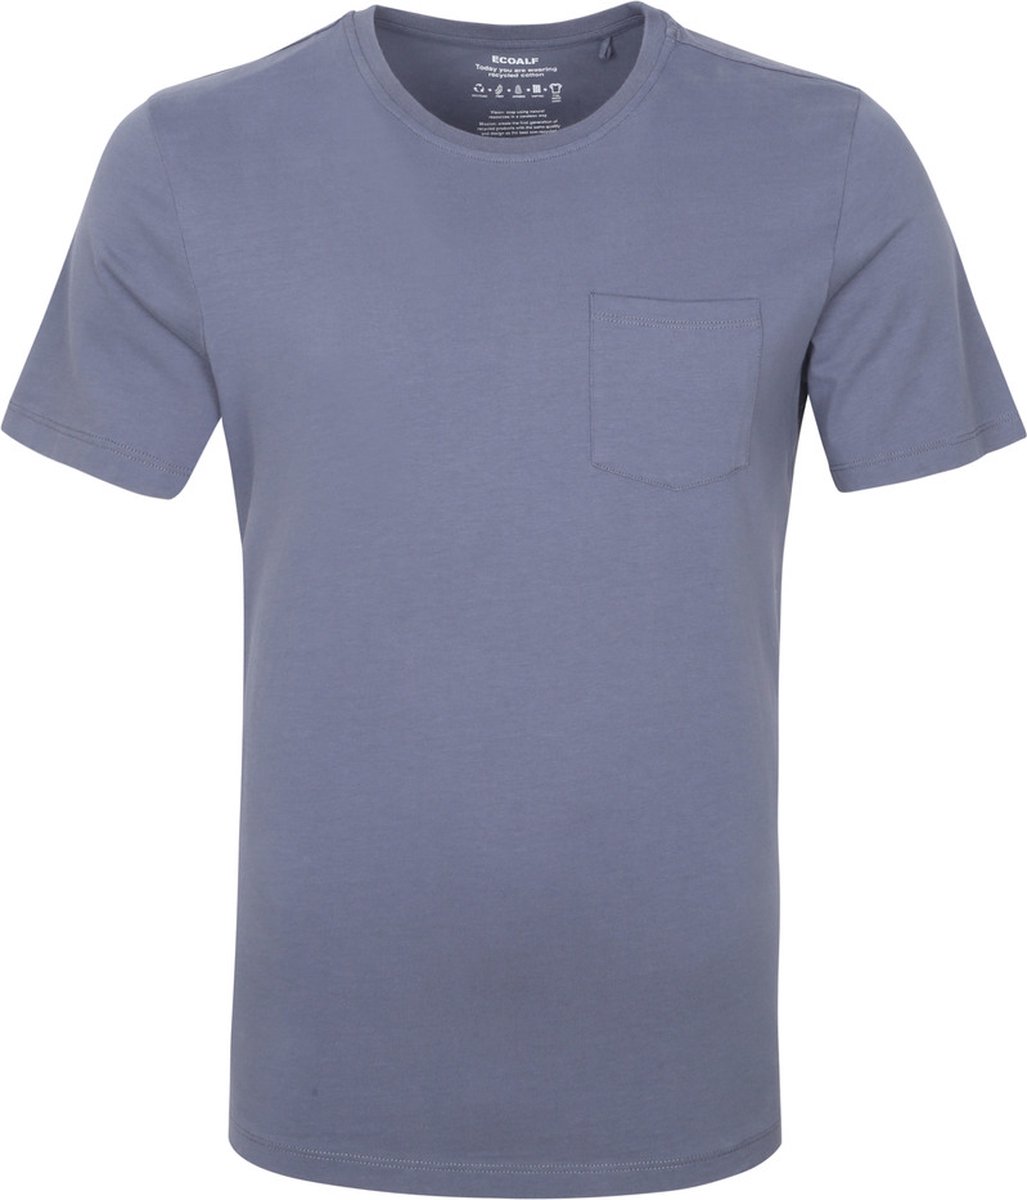 Ecoalf - Avandaro T-Shirt Blauw - Maat M - Regular-fit